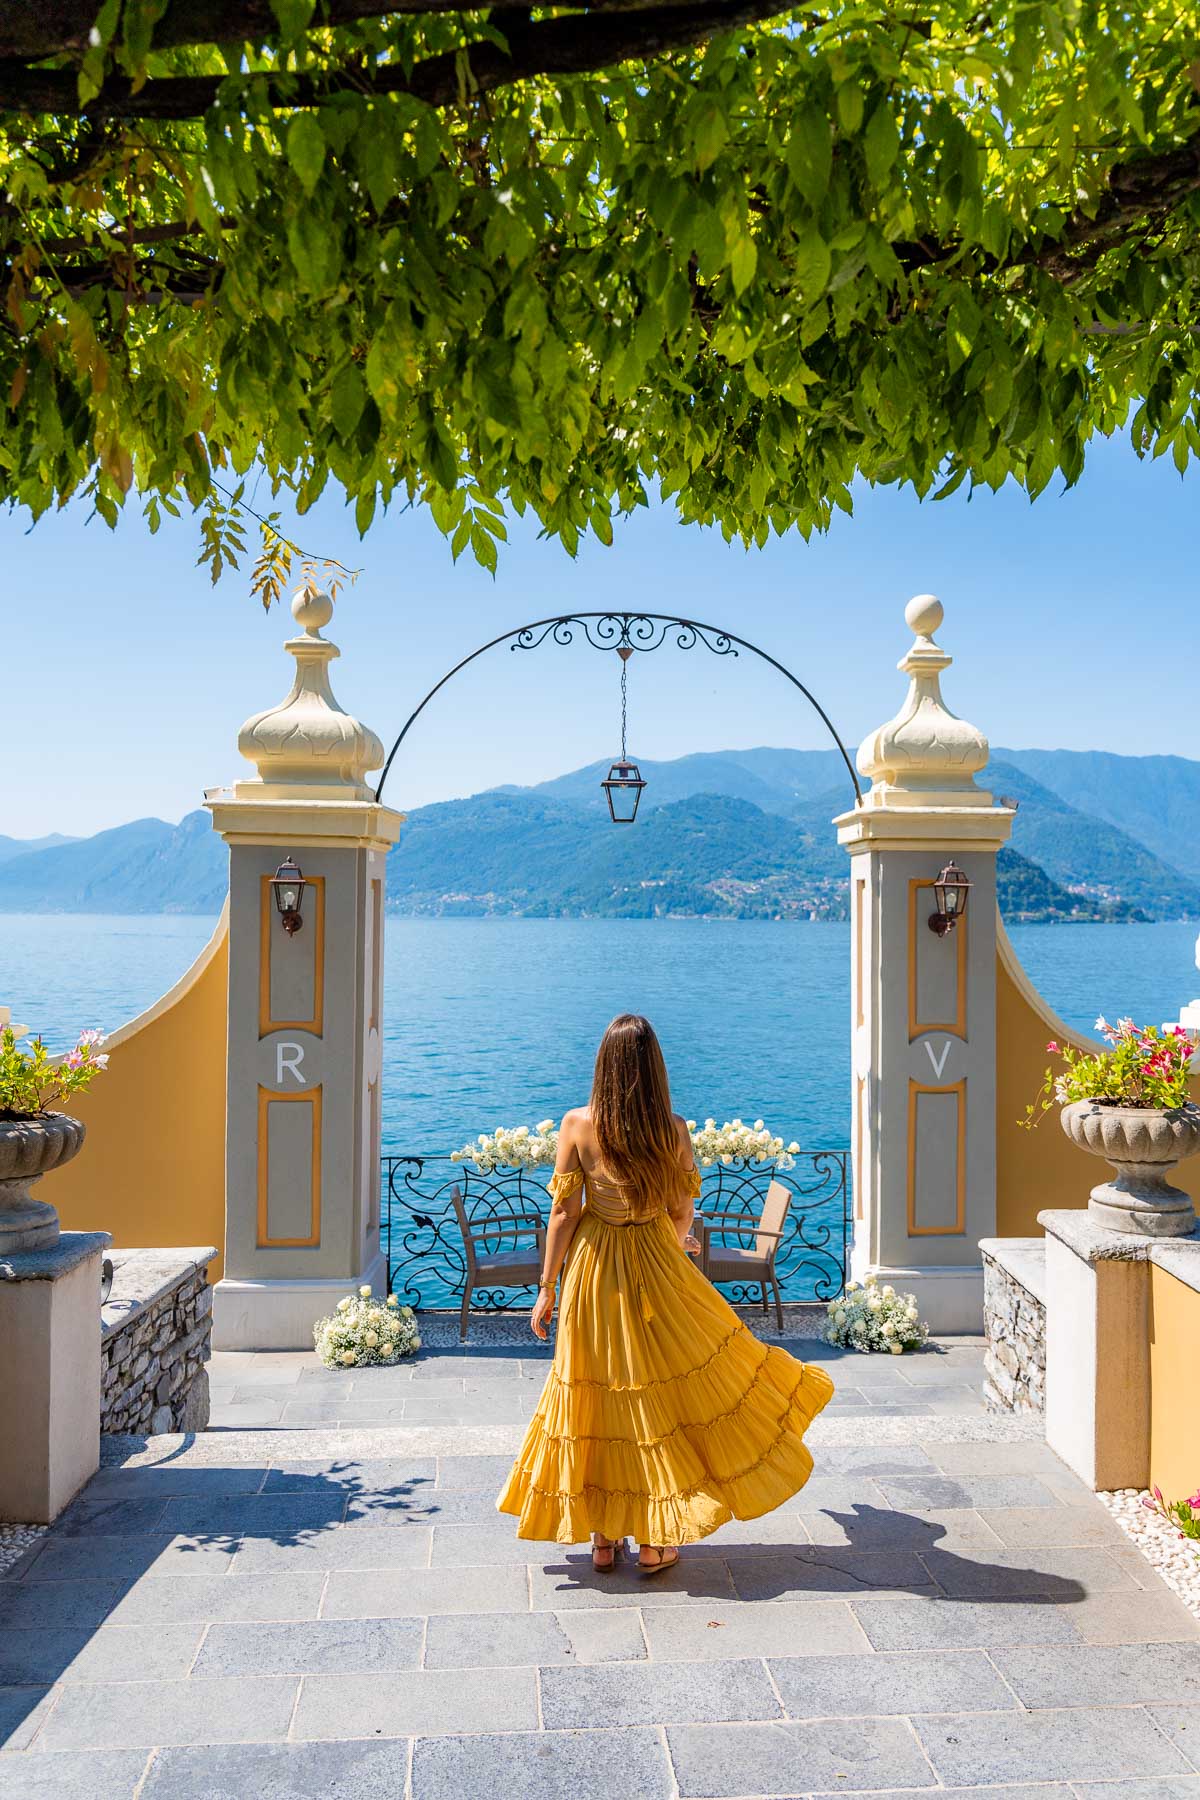 Girl in yellow dress at Bar Giardino at Hotel Royal Victoria in Varenna, Lake Como